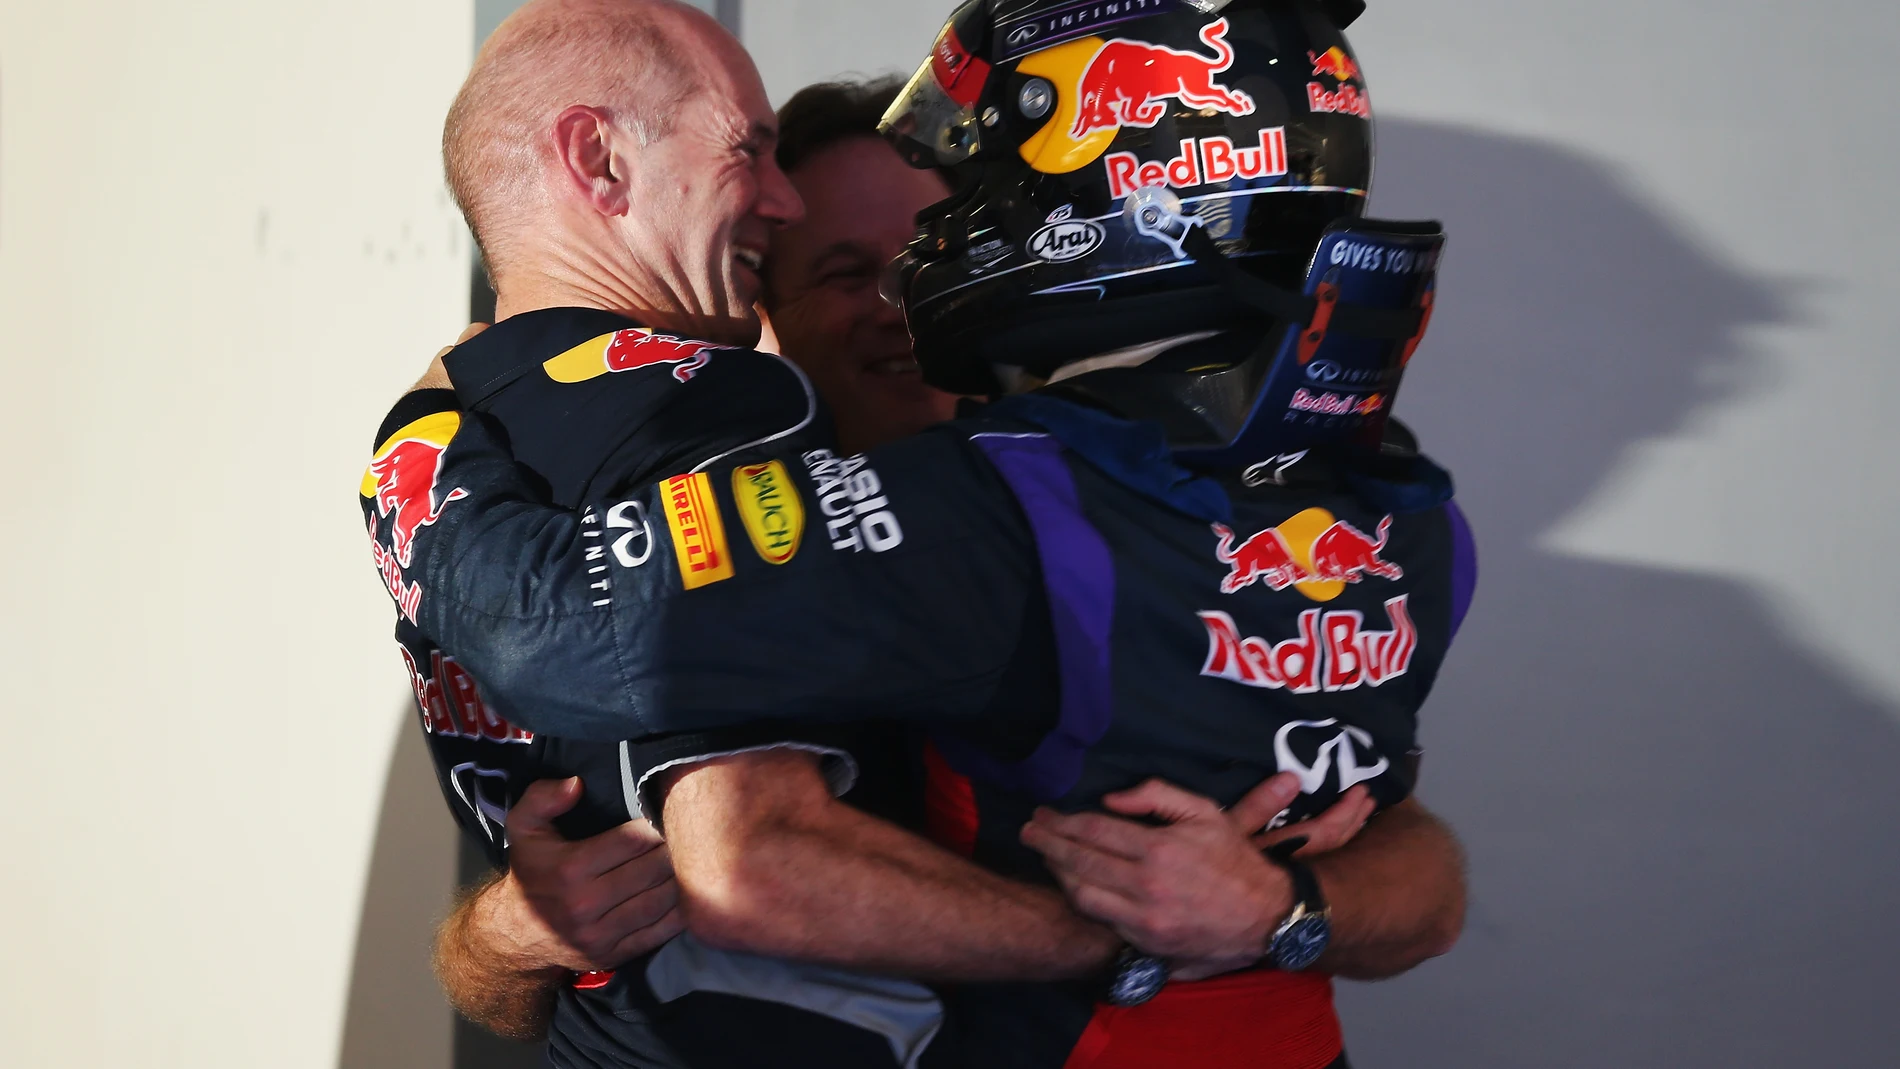 Los ingenieros de Red Bull abrazan a Vettel